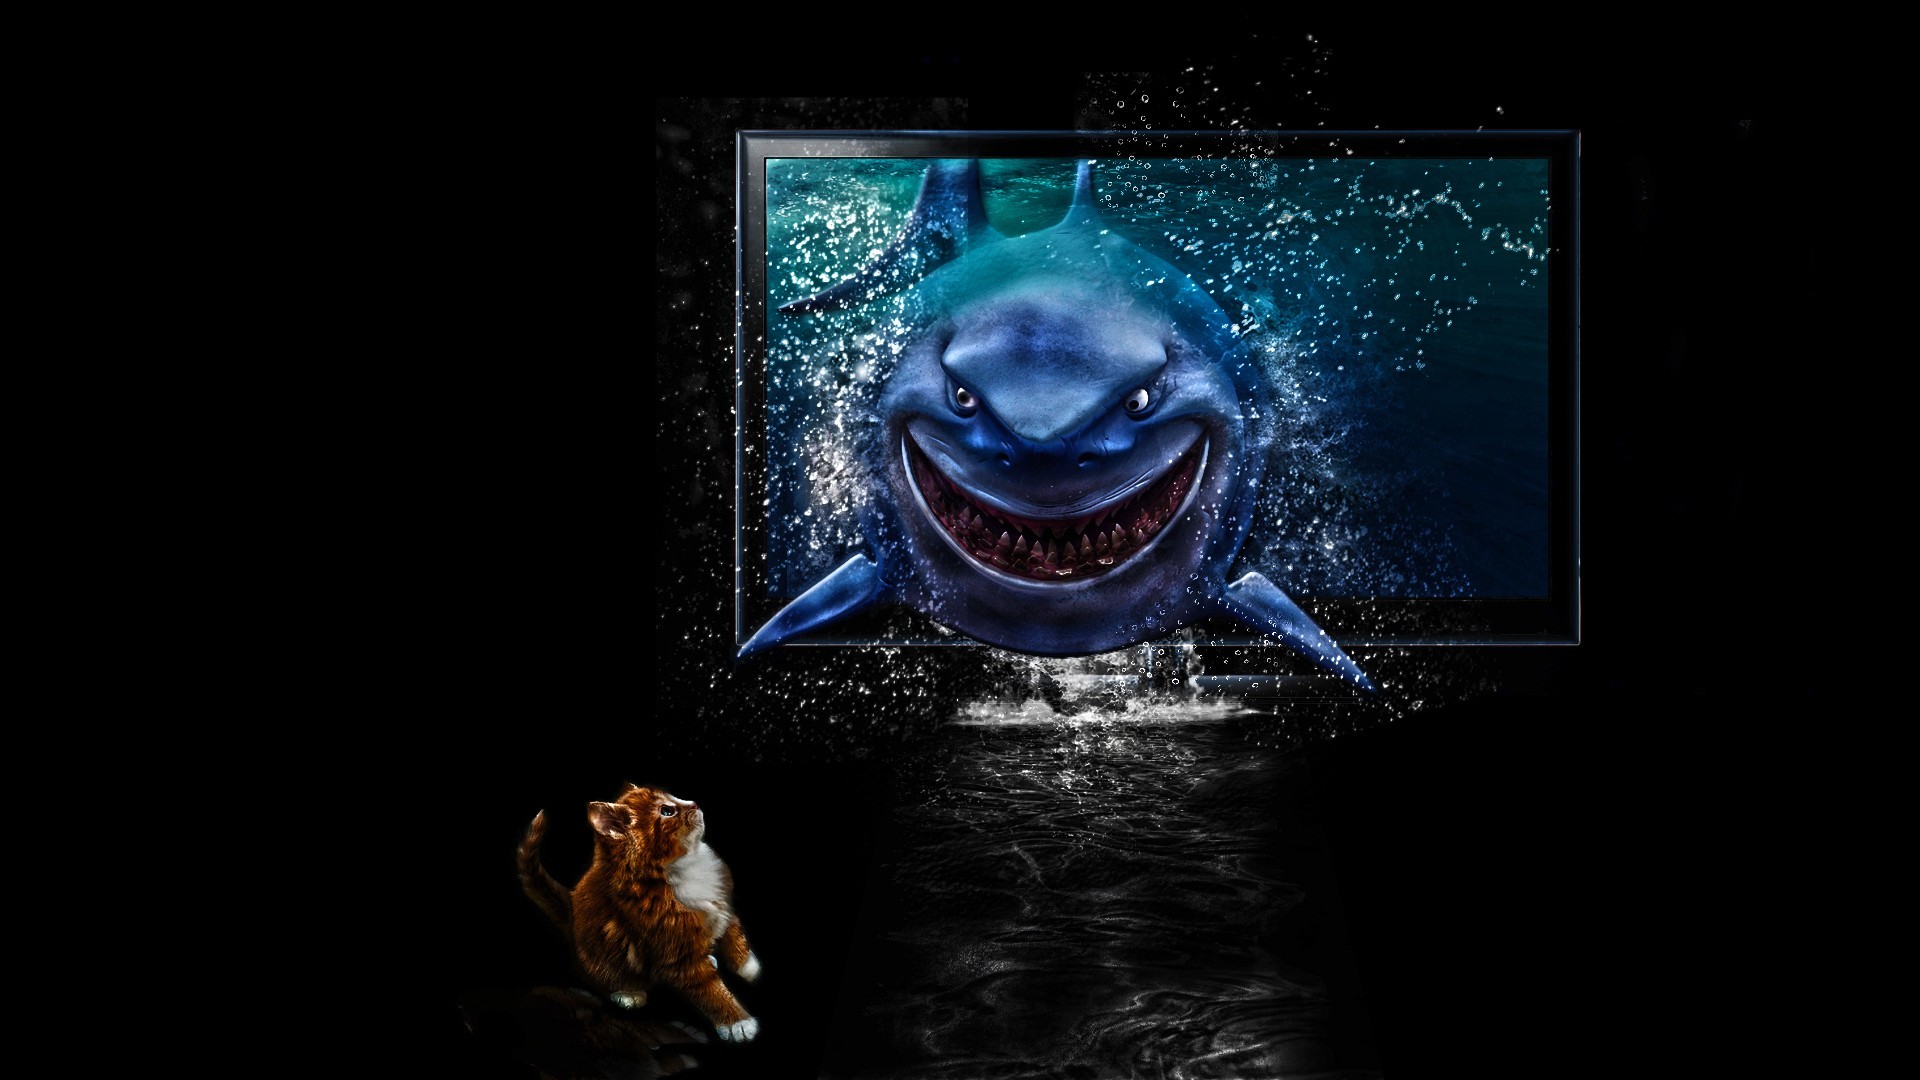 1920x1080 Movie - Finding Nemo Bruce (Finding Nemo) Wallpaper